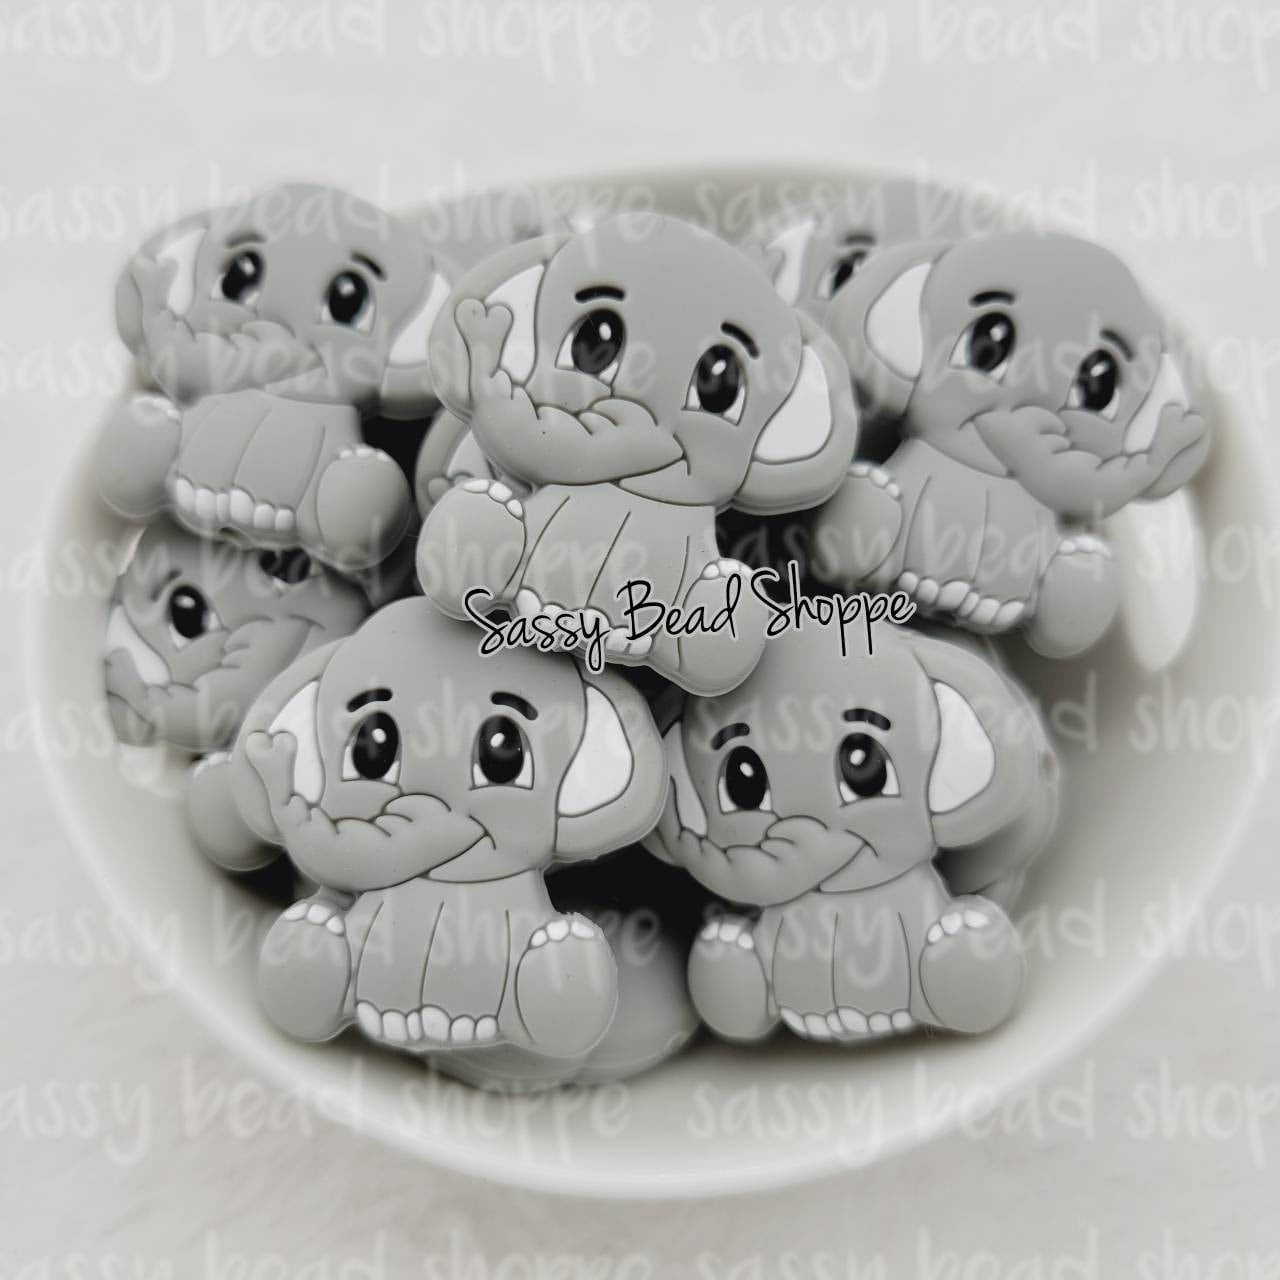 Gray Elephant Focal Bead